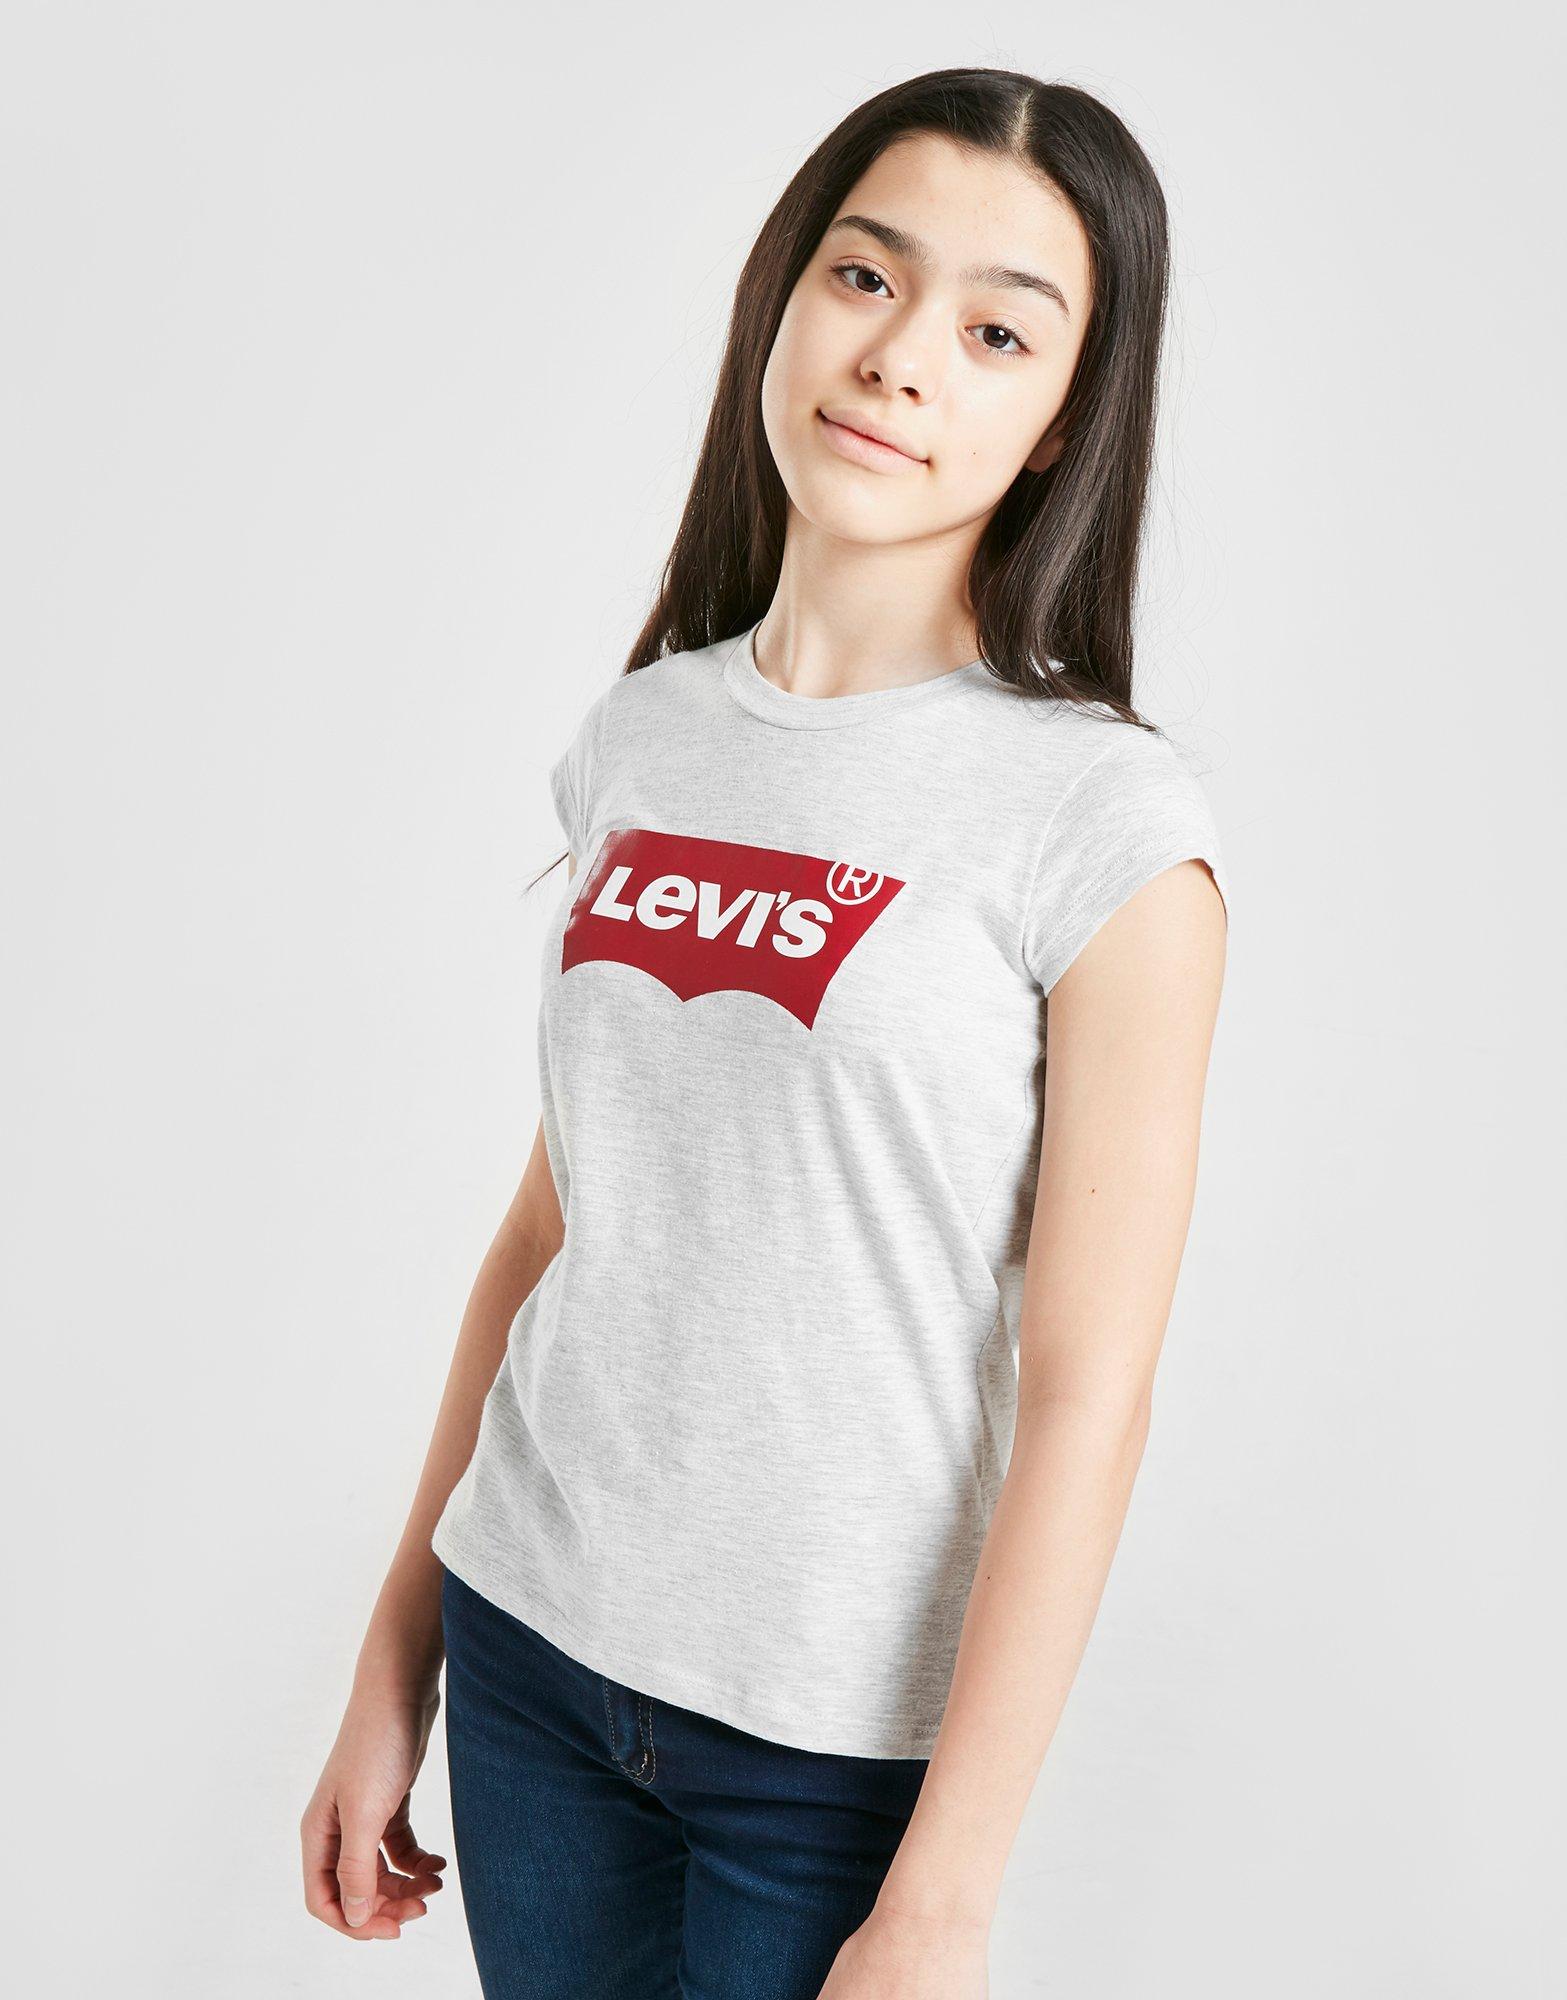 levis t shirt for girls